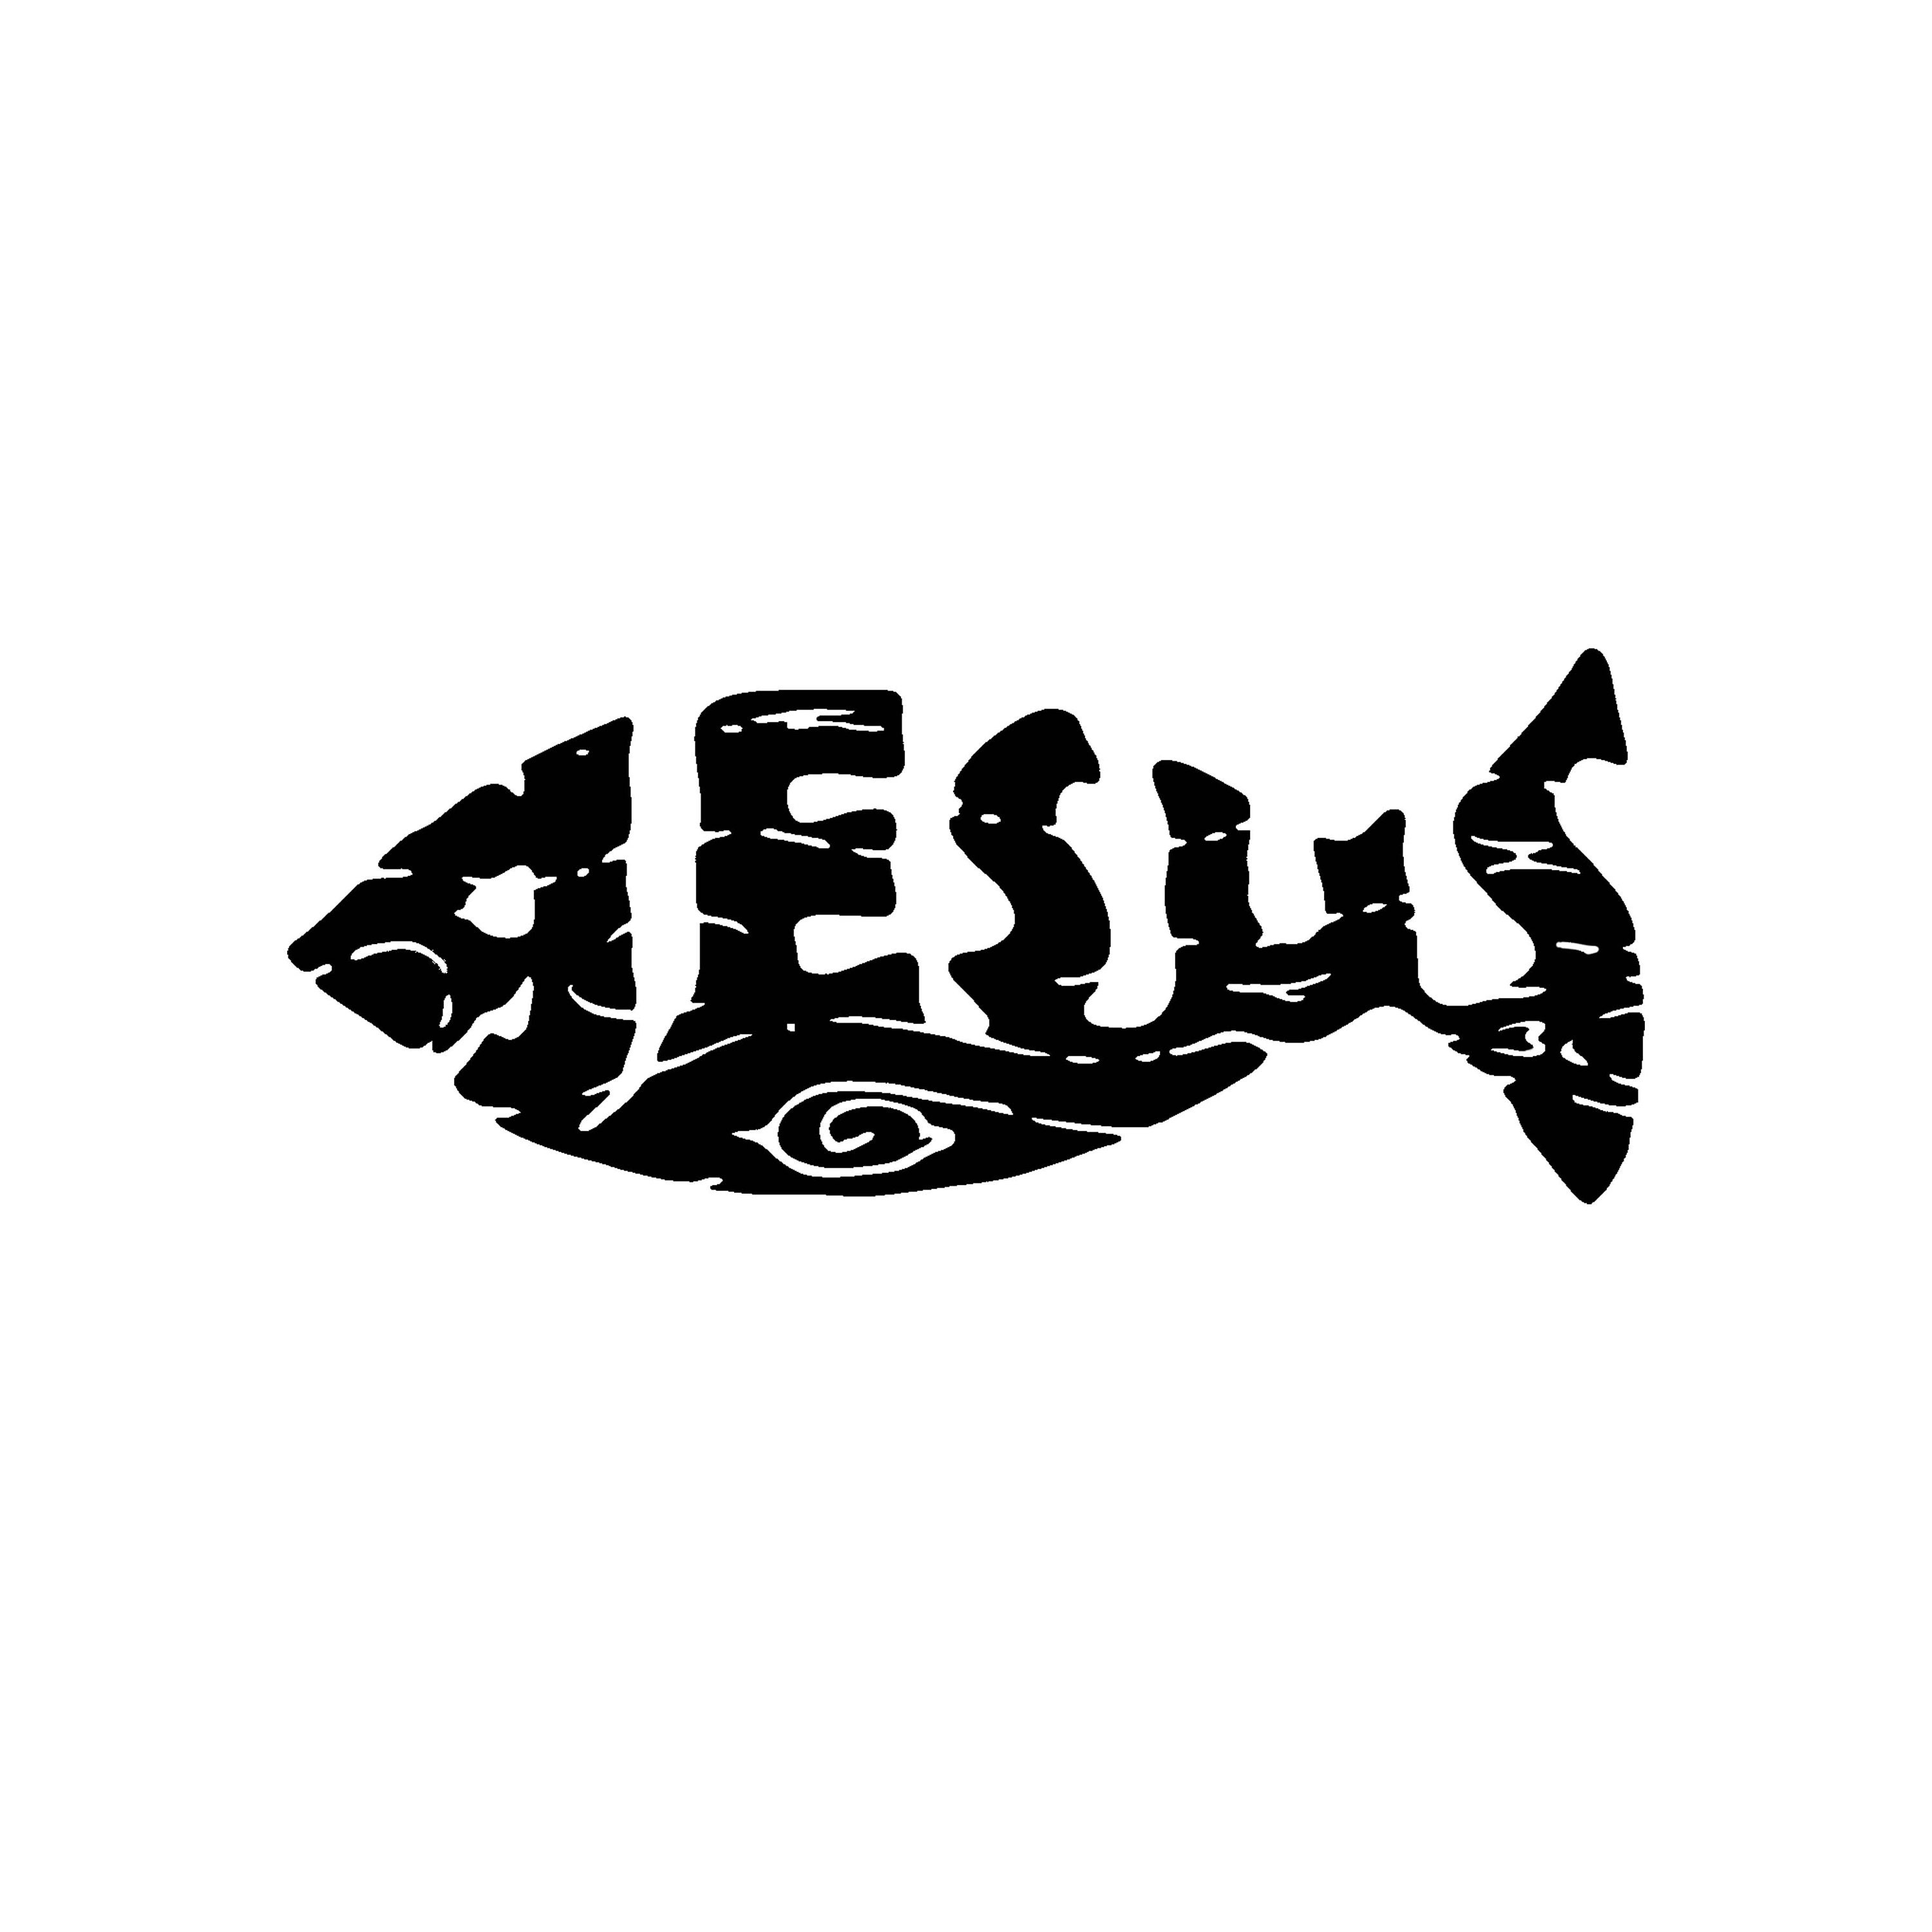 Jesus fish sticker - .de